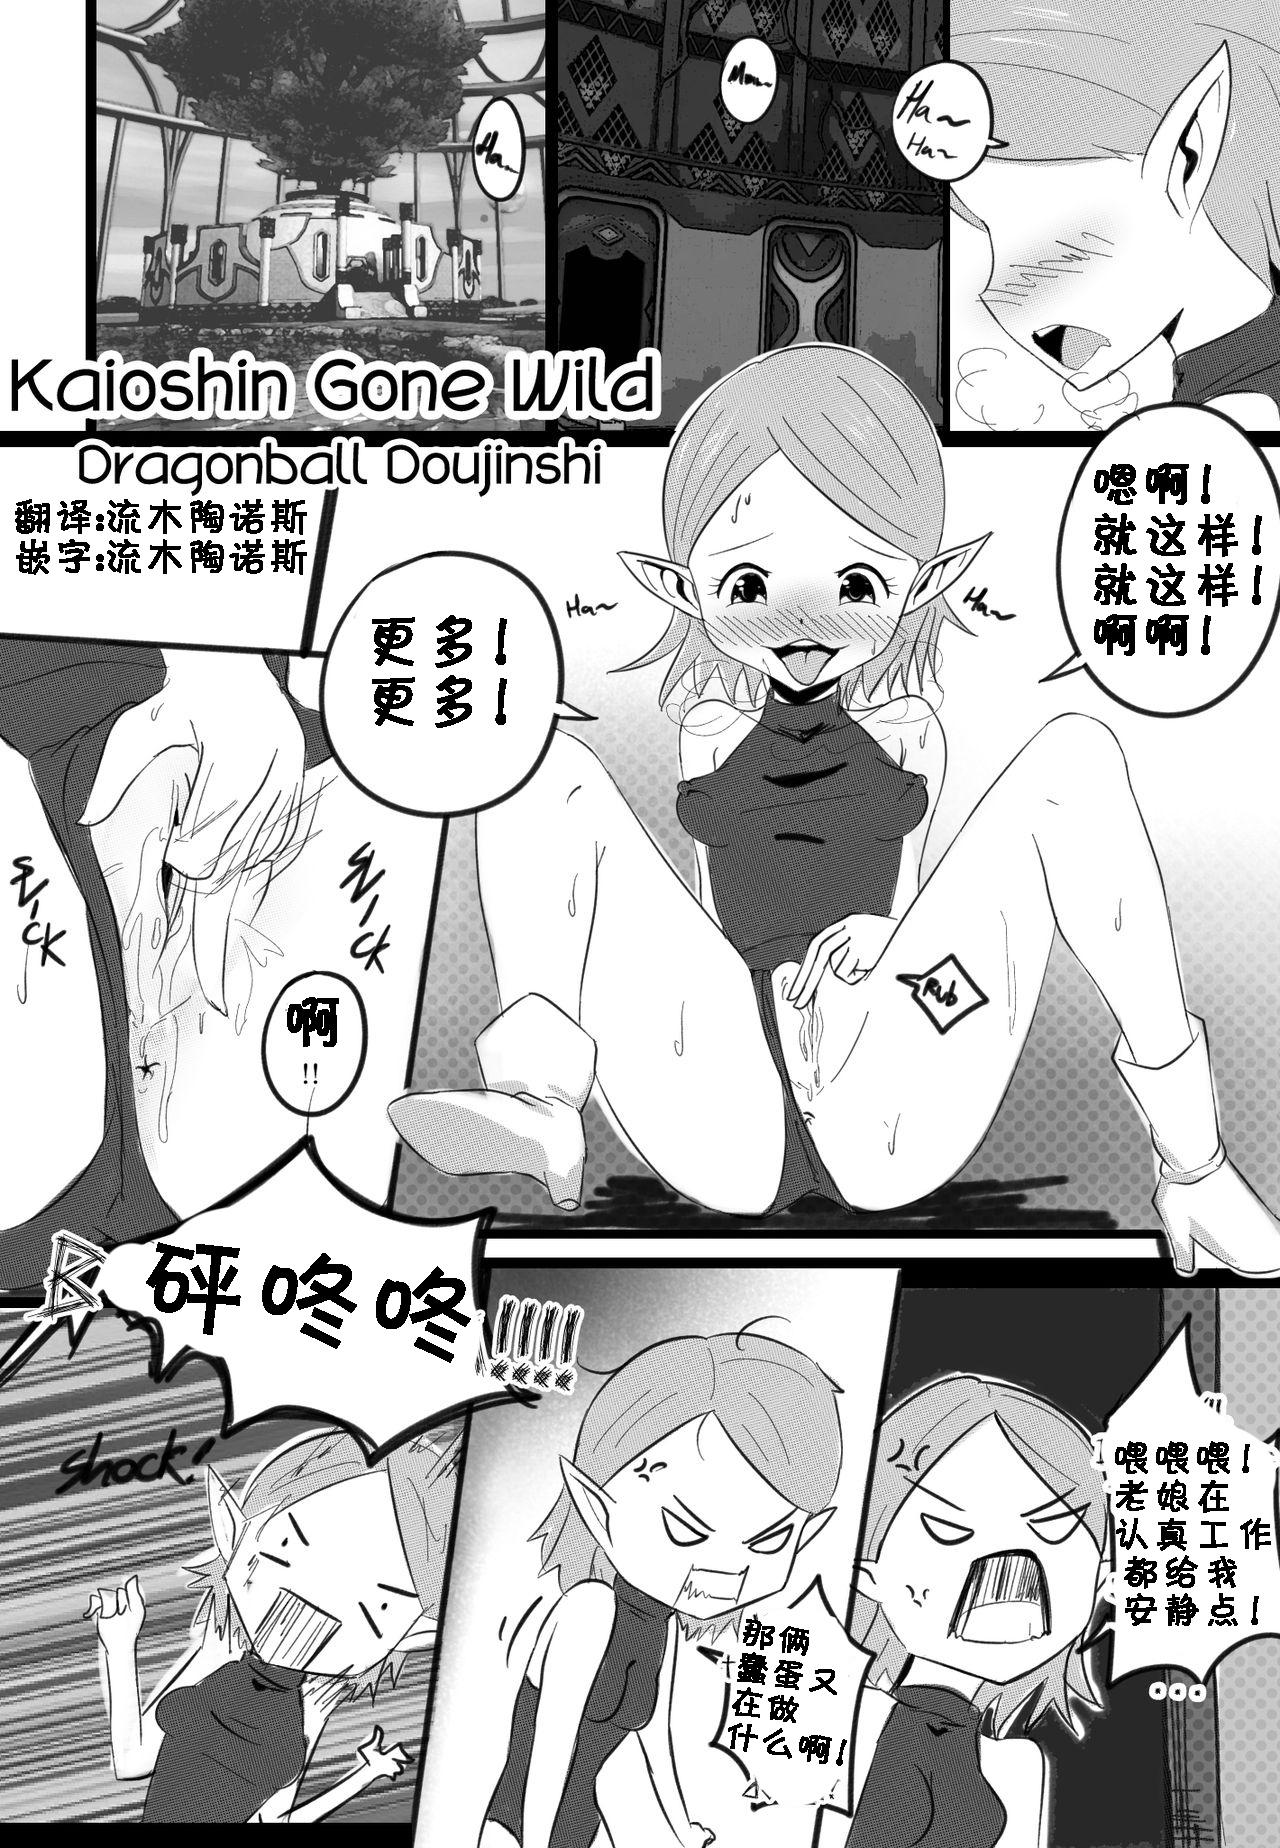 Pounding KAIOSHIN GONE WILD - Dragon ball z Mojada - Page 4